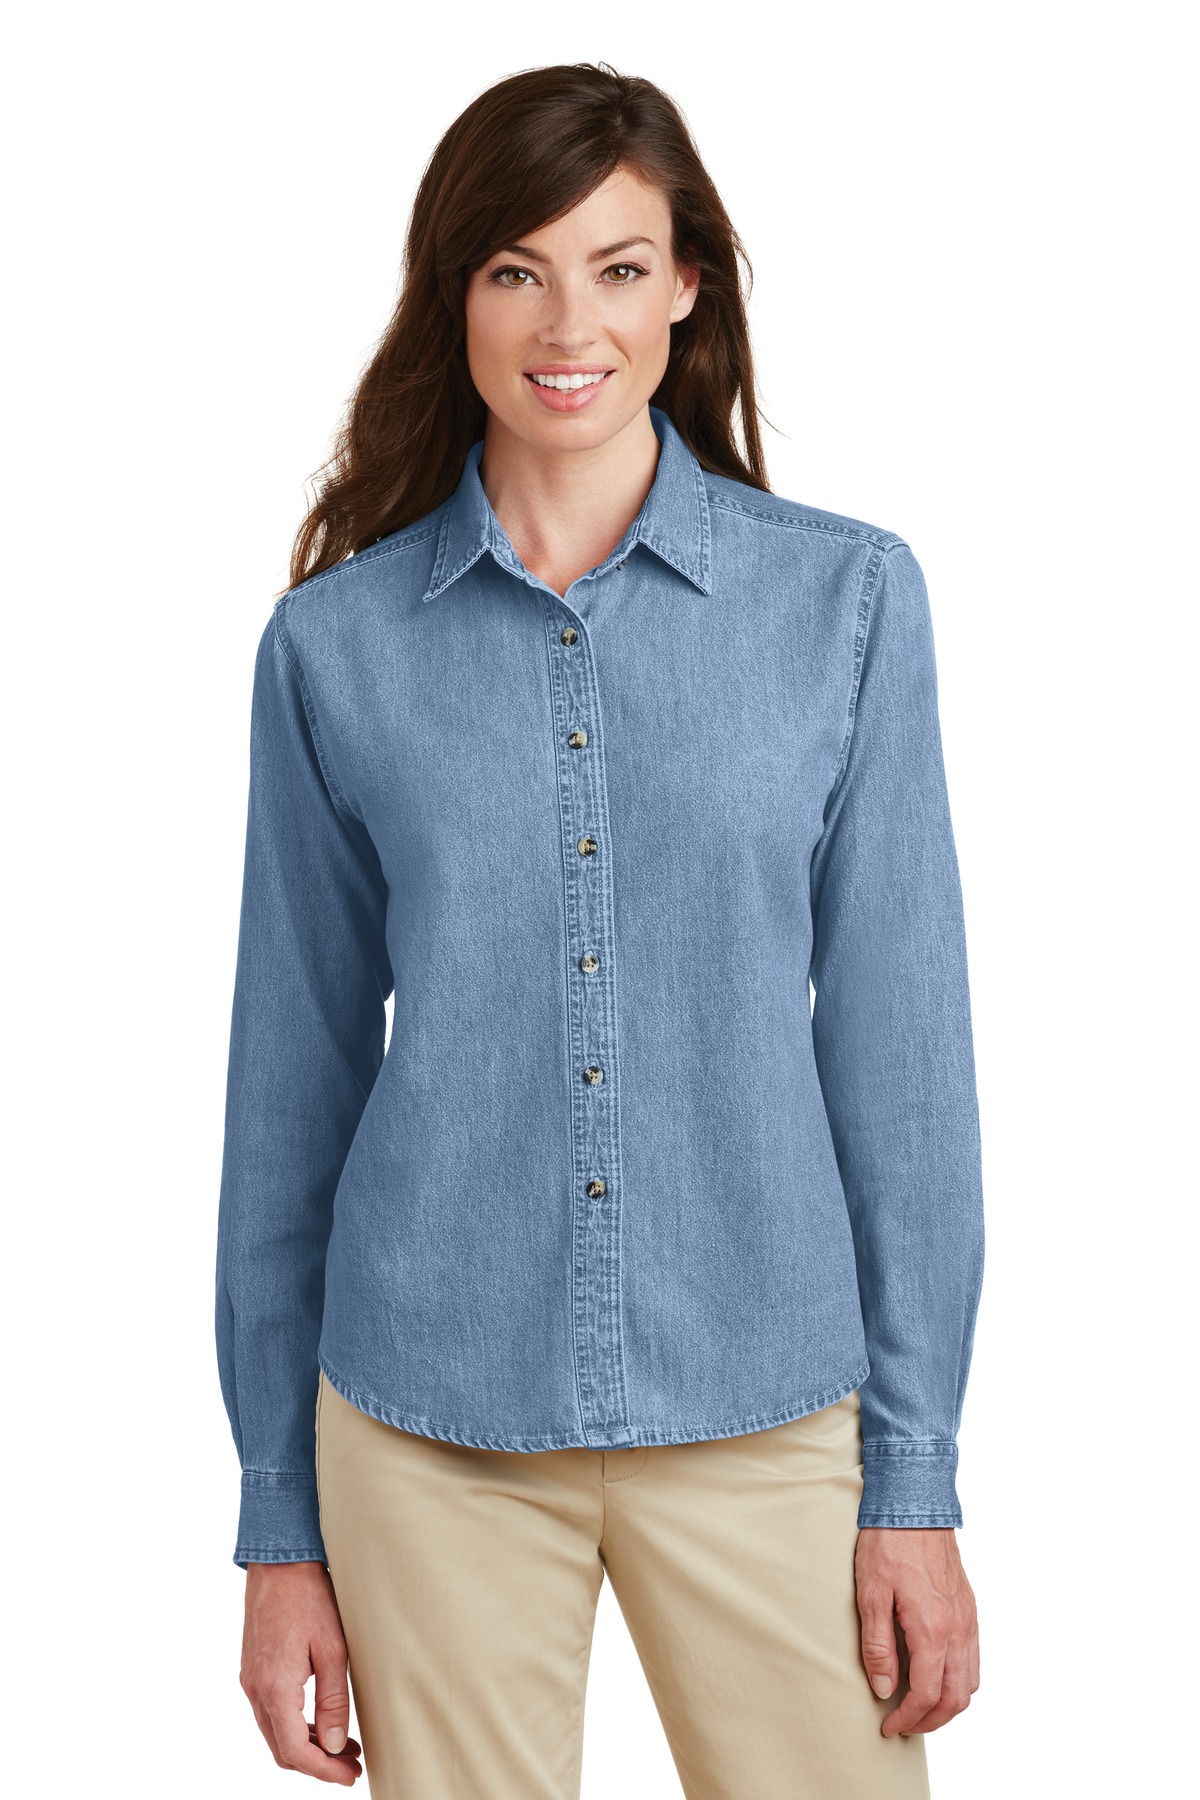 Port & Company - Ladies Long Sleeve Value Denim Shirt....